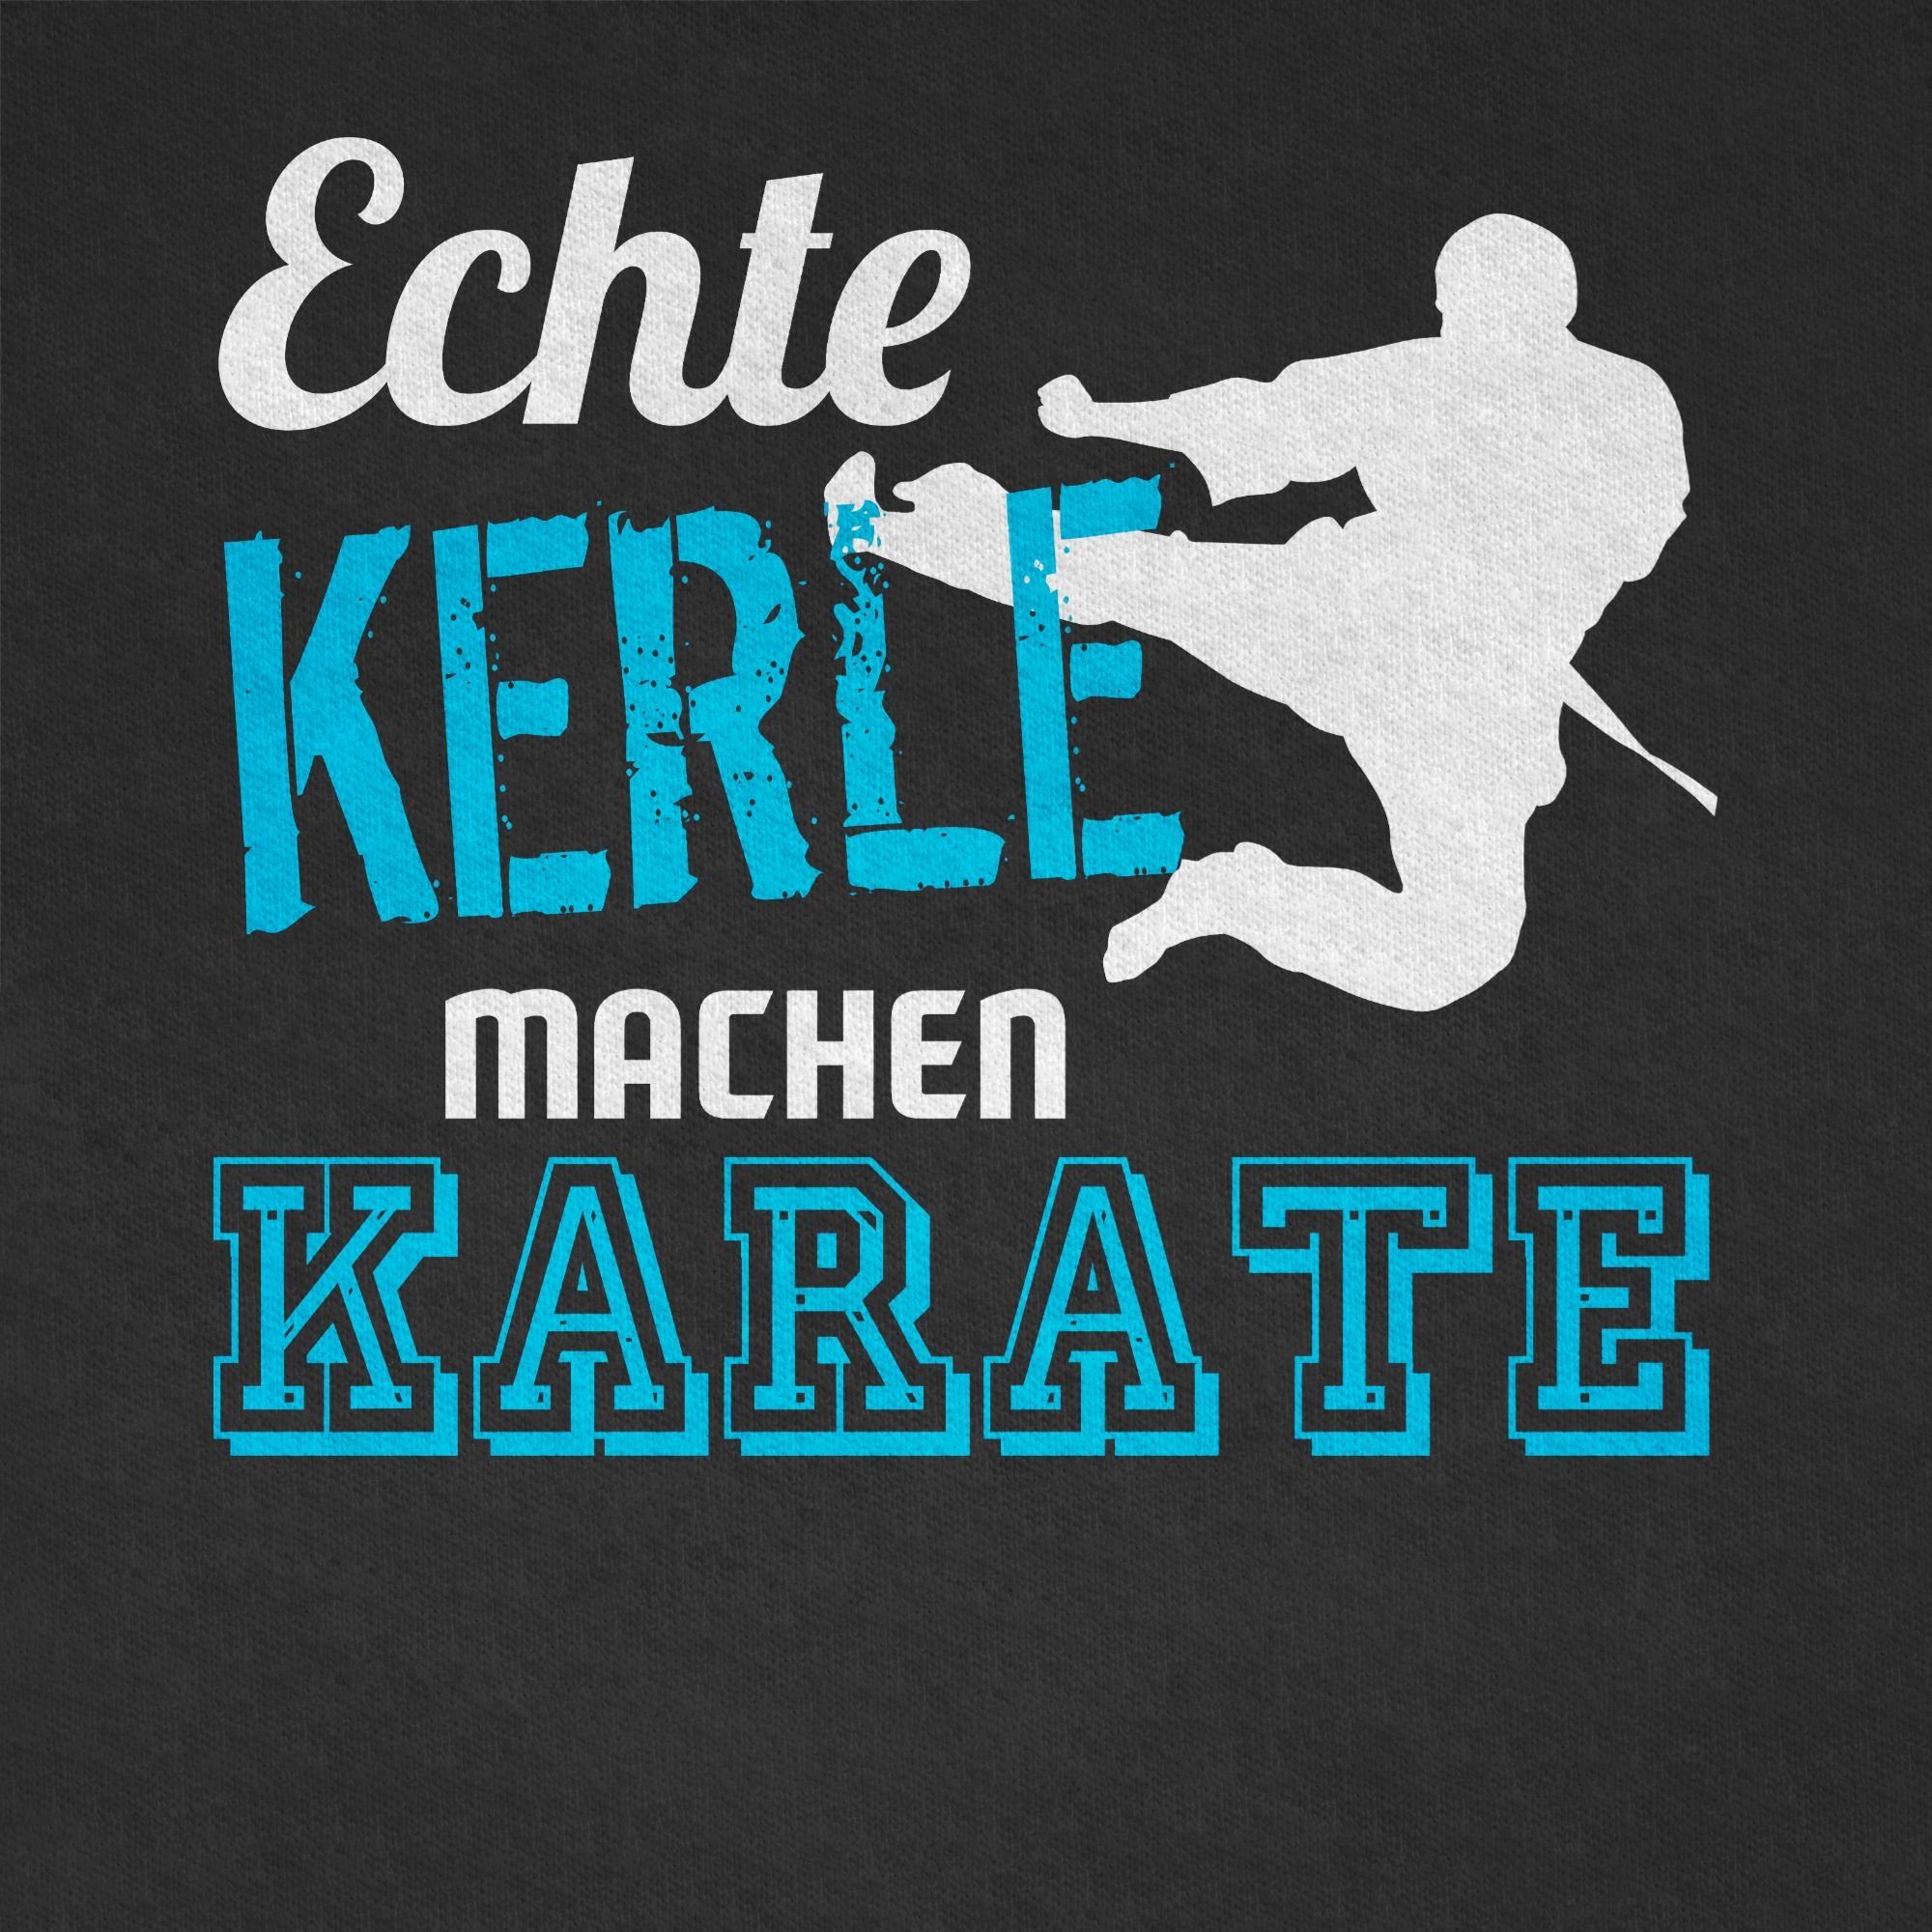 Echte T-Shirt Schwarz 2 machen Kleidung Sport Shirtracer Karate Kinder Kerle